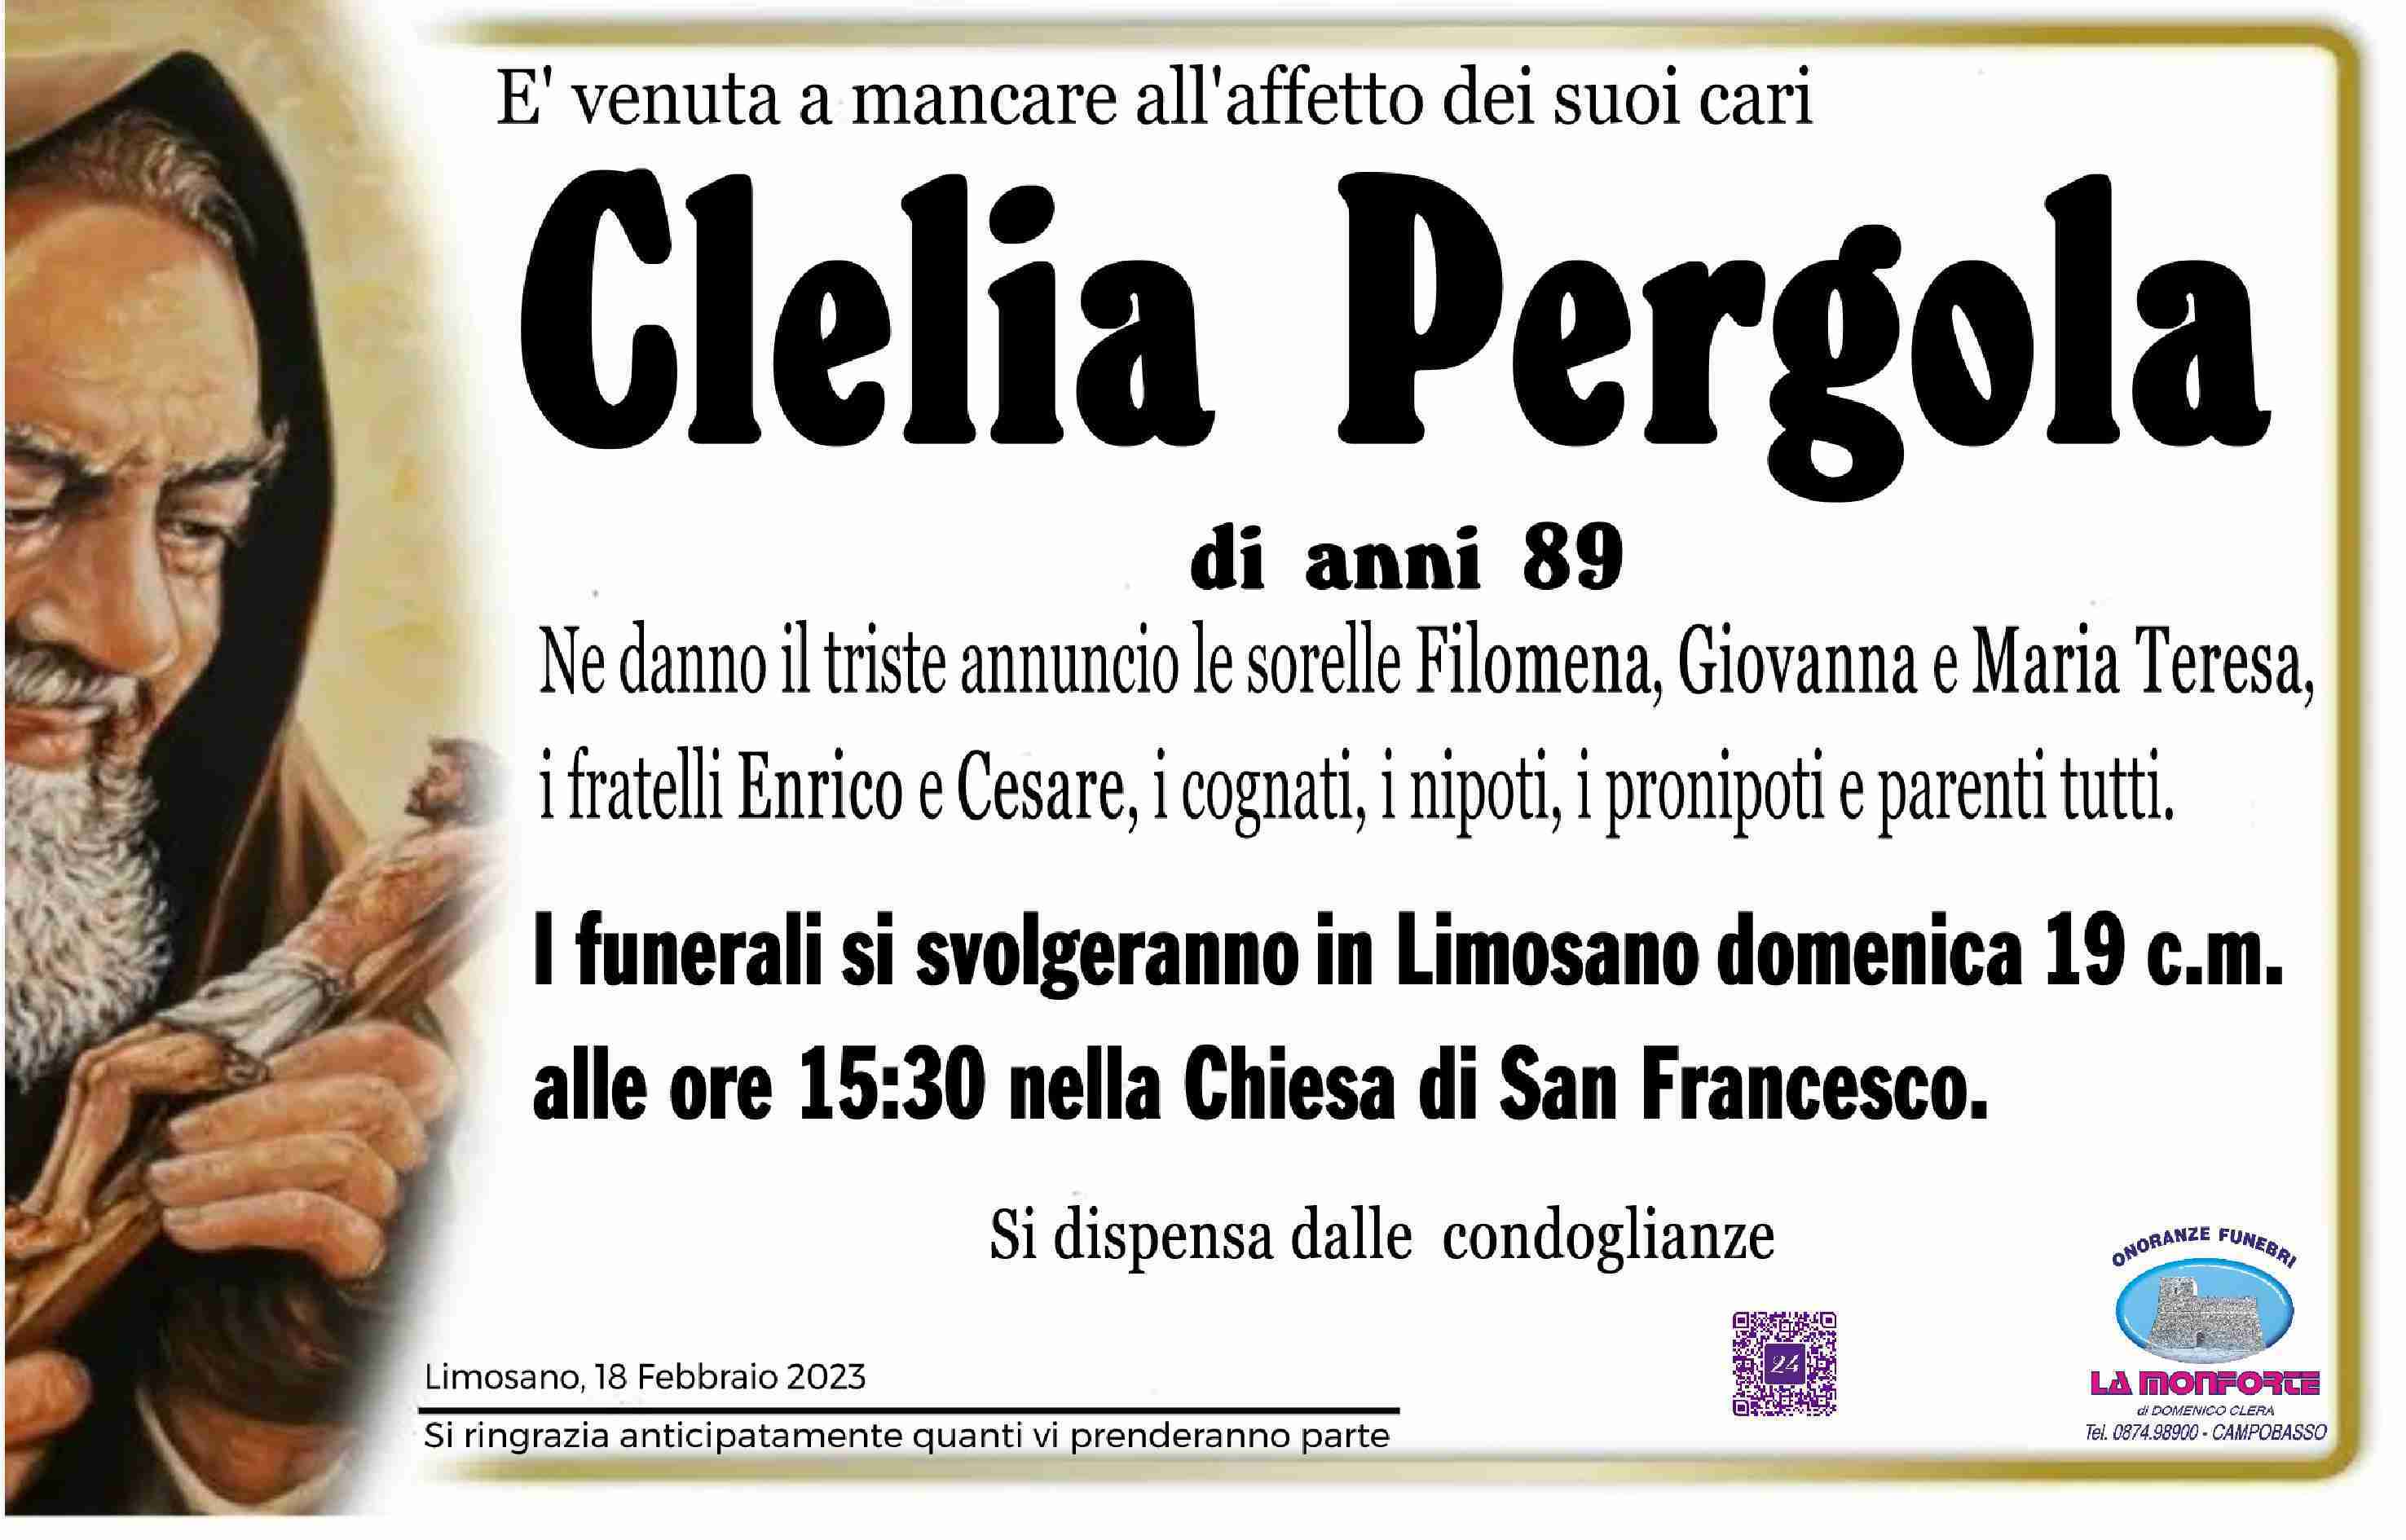 Clelia Pergola